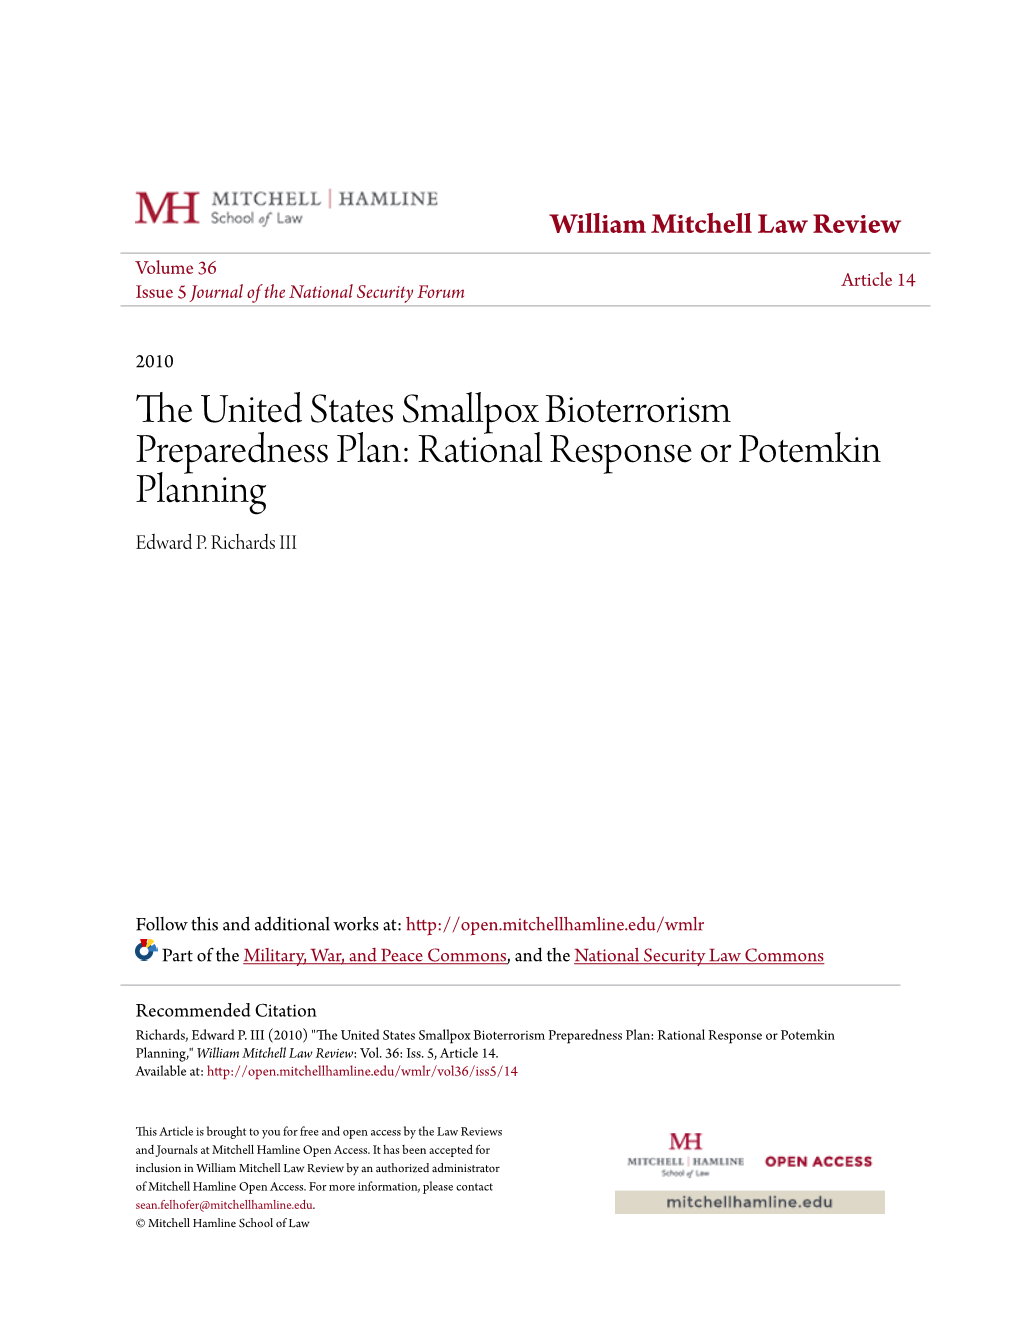 The United States Smallpox Bioterrorism Preparedness Plan: Ration